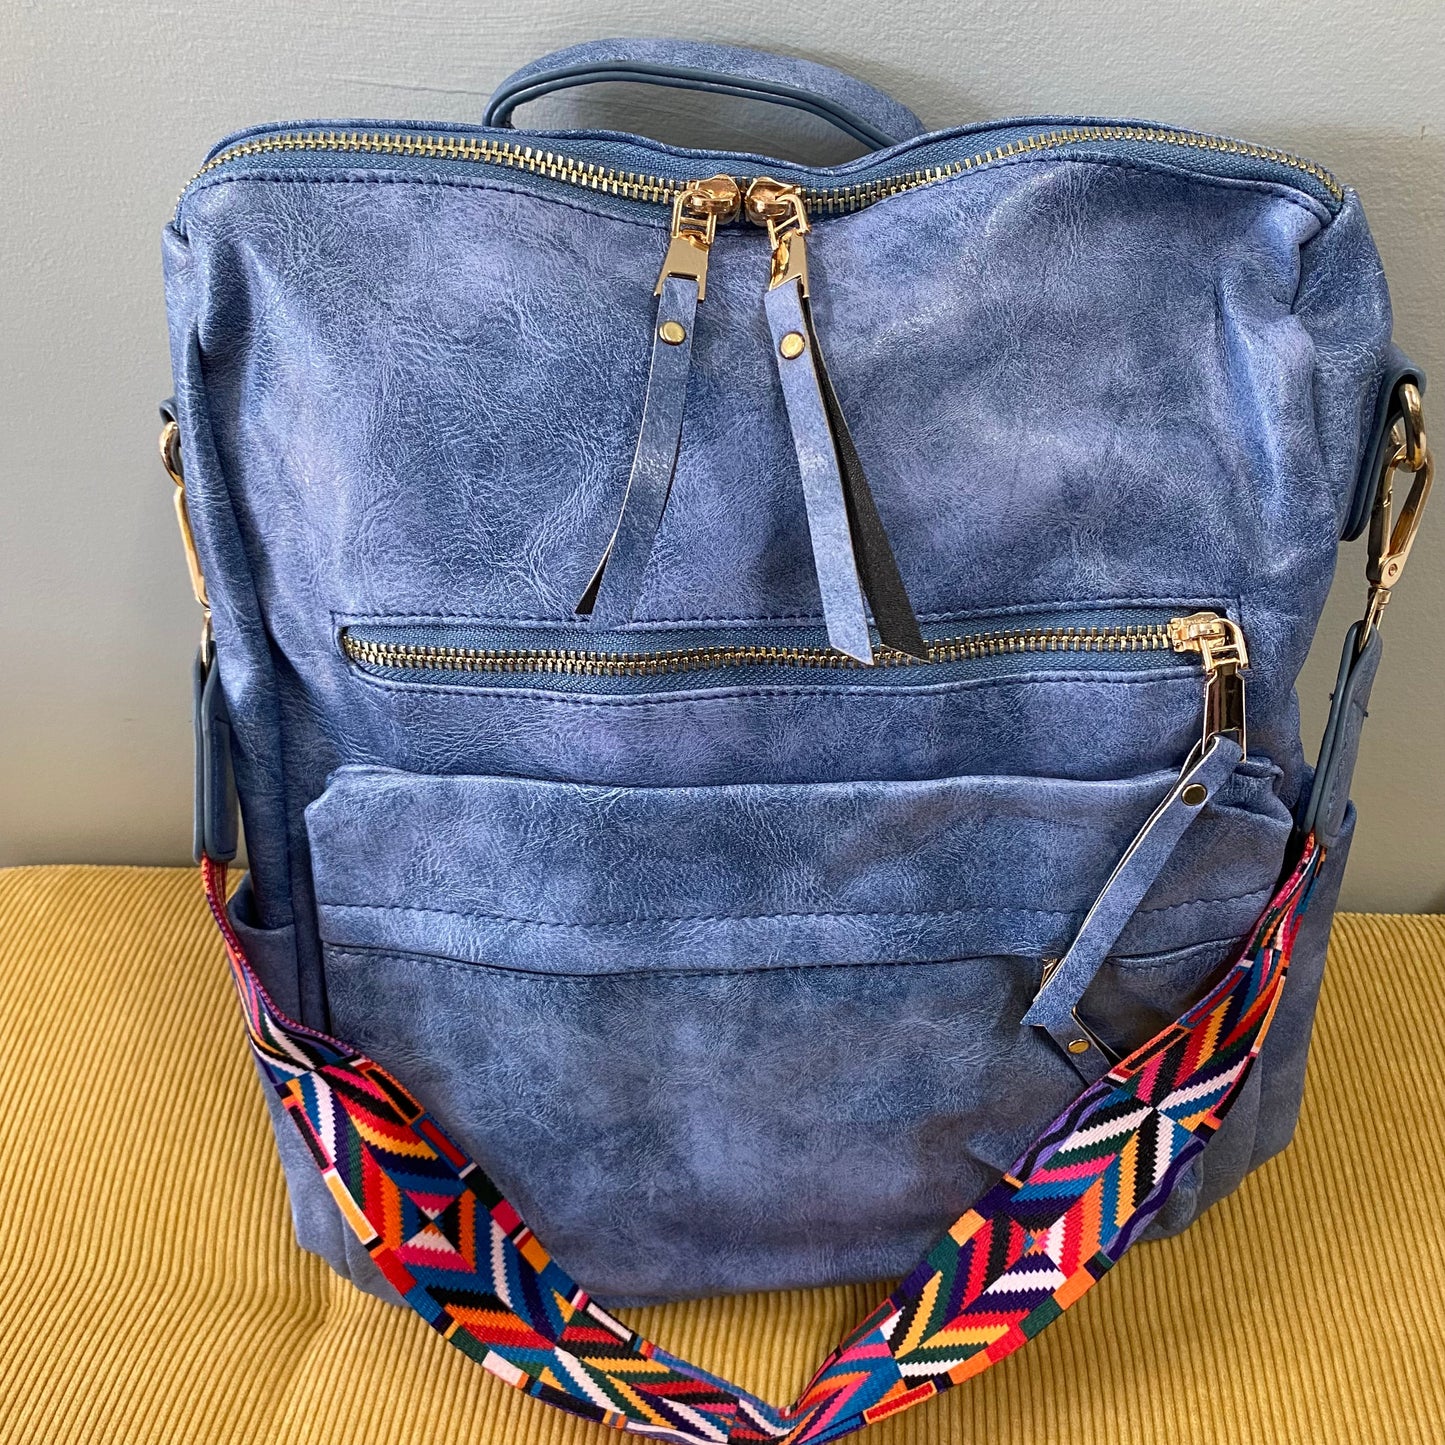 The Brooke Backpack - Blue